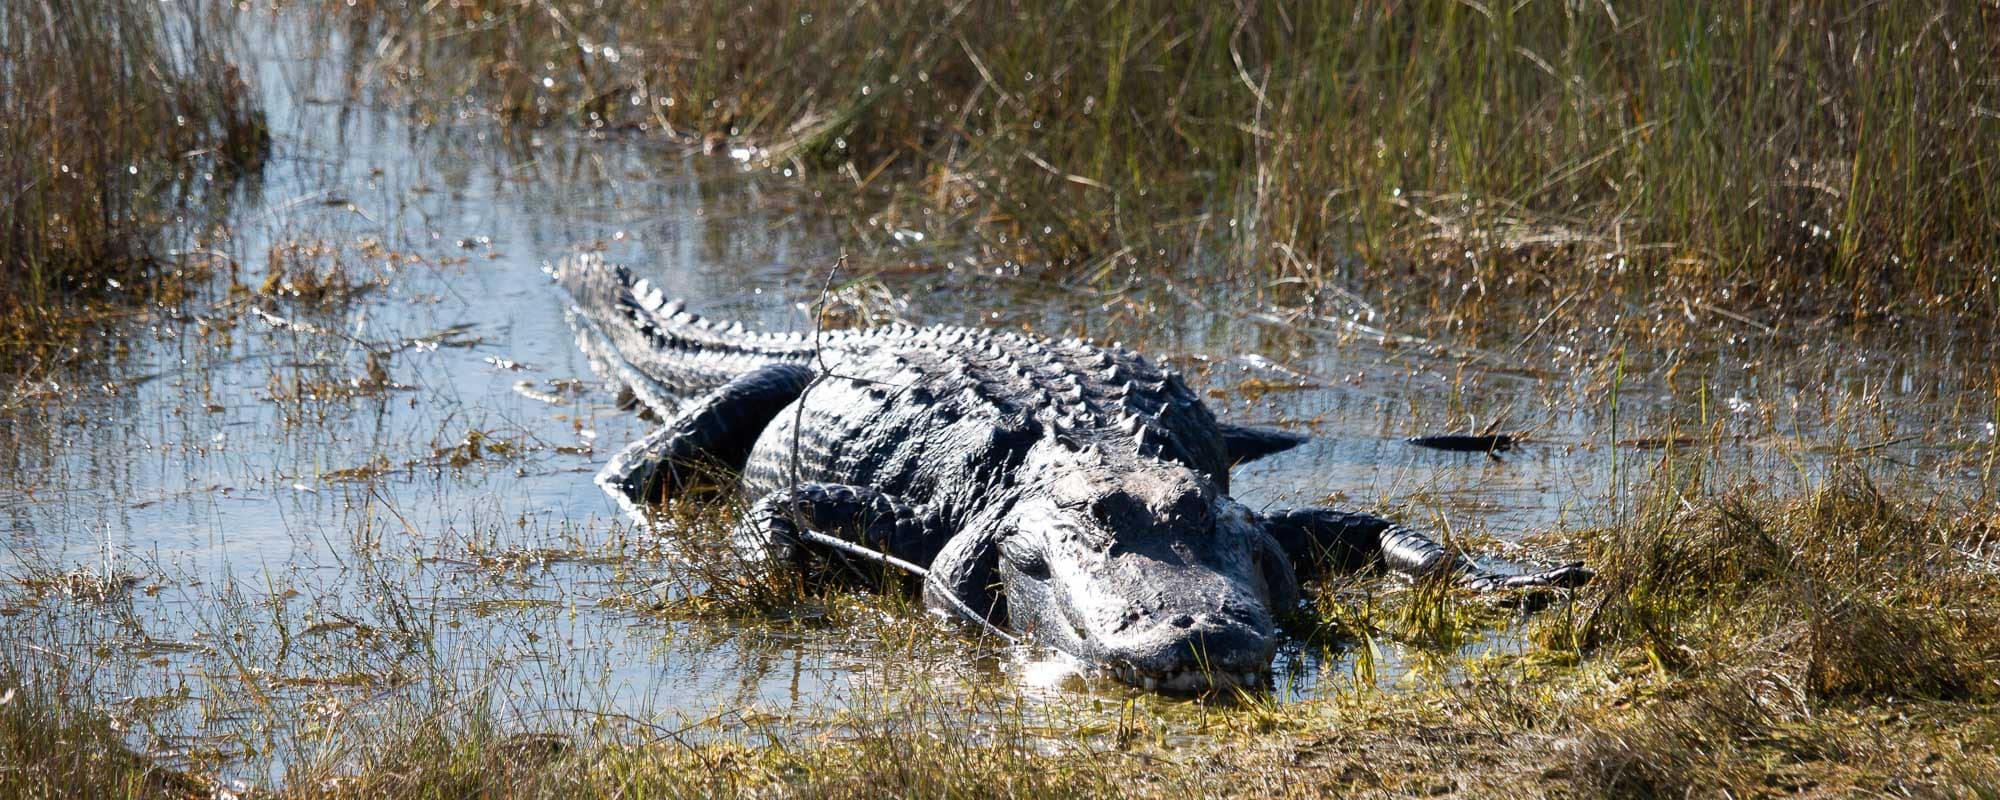 Everglades National Park - Alligator in sawgrass marsh on the Shark Valley Tram Road